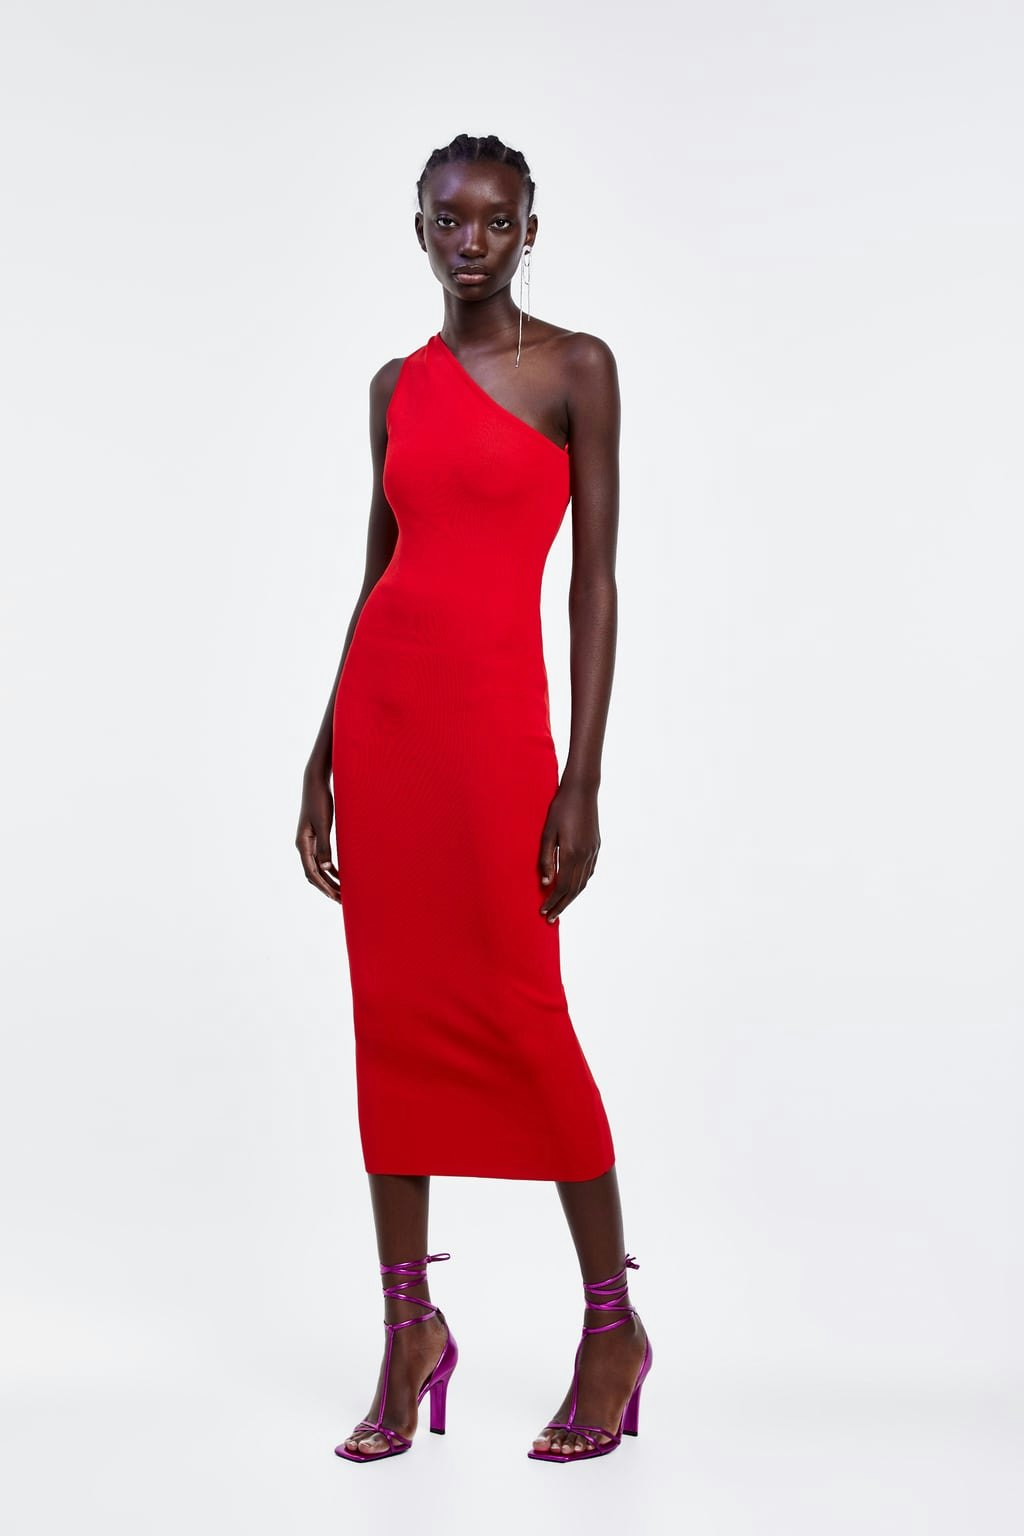 Emily Ratajkowski Wore A $50 Zara Dress 